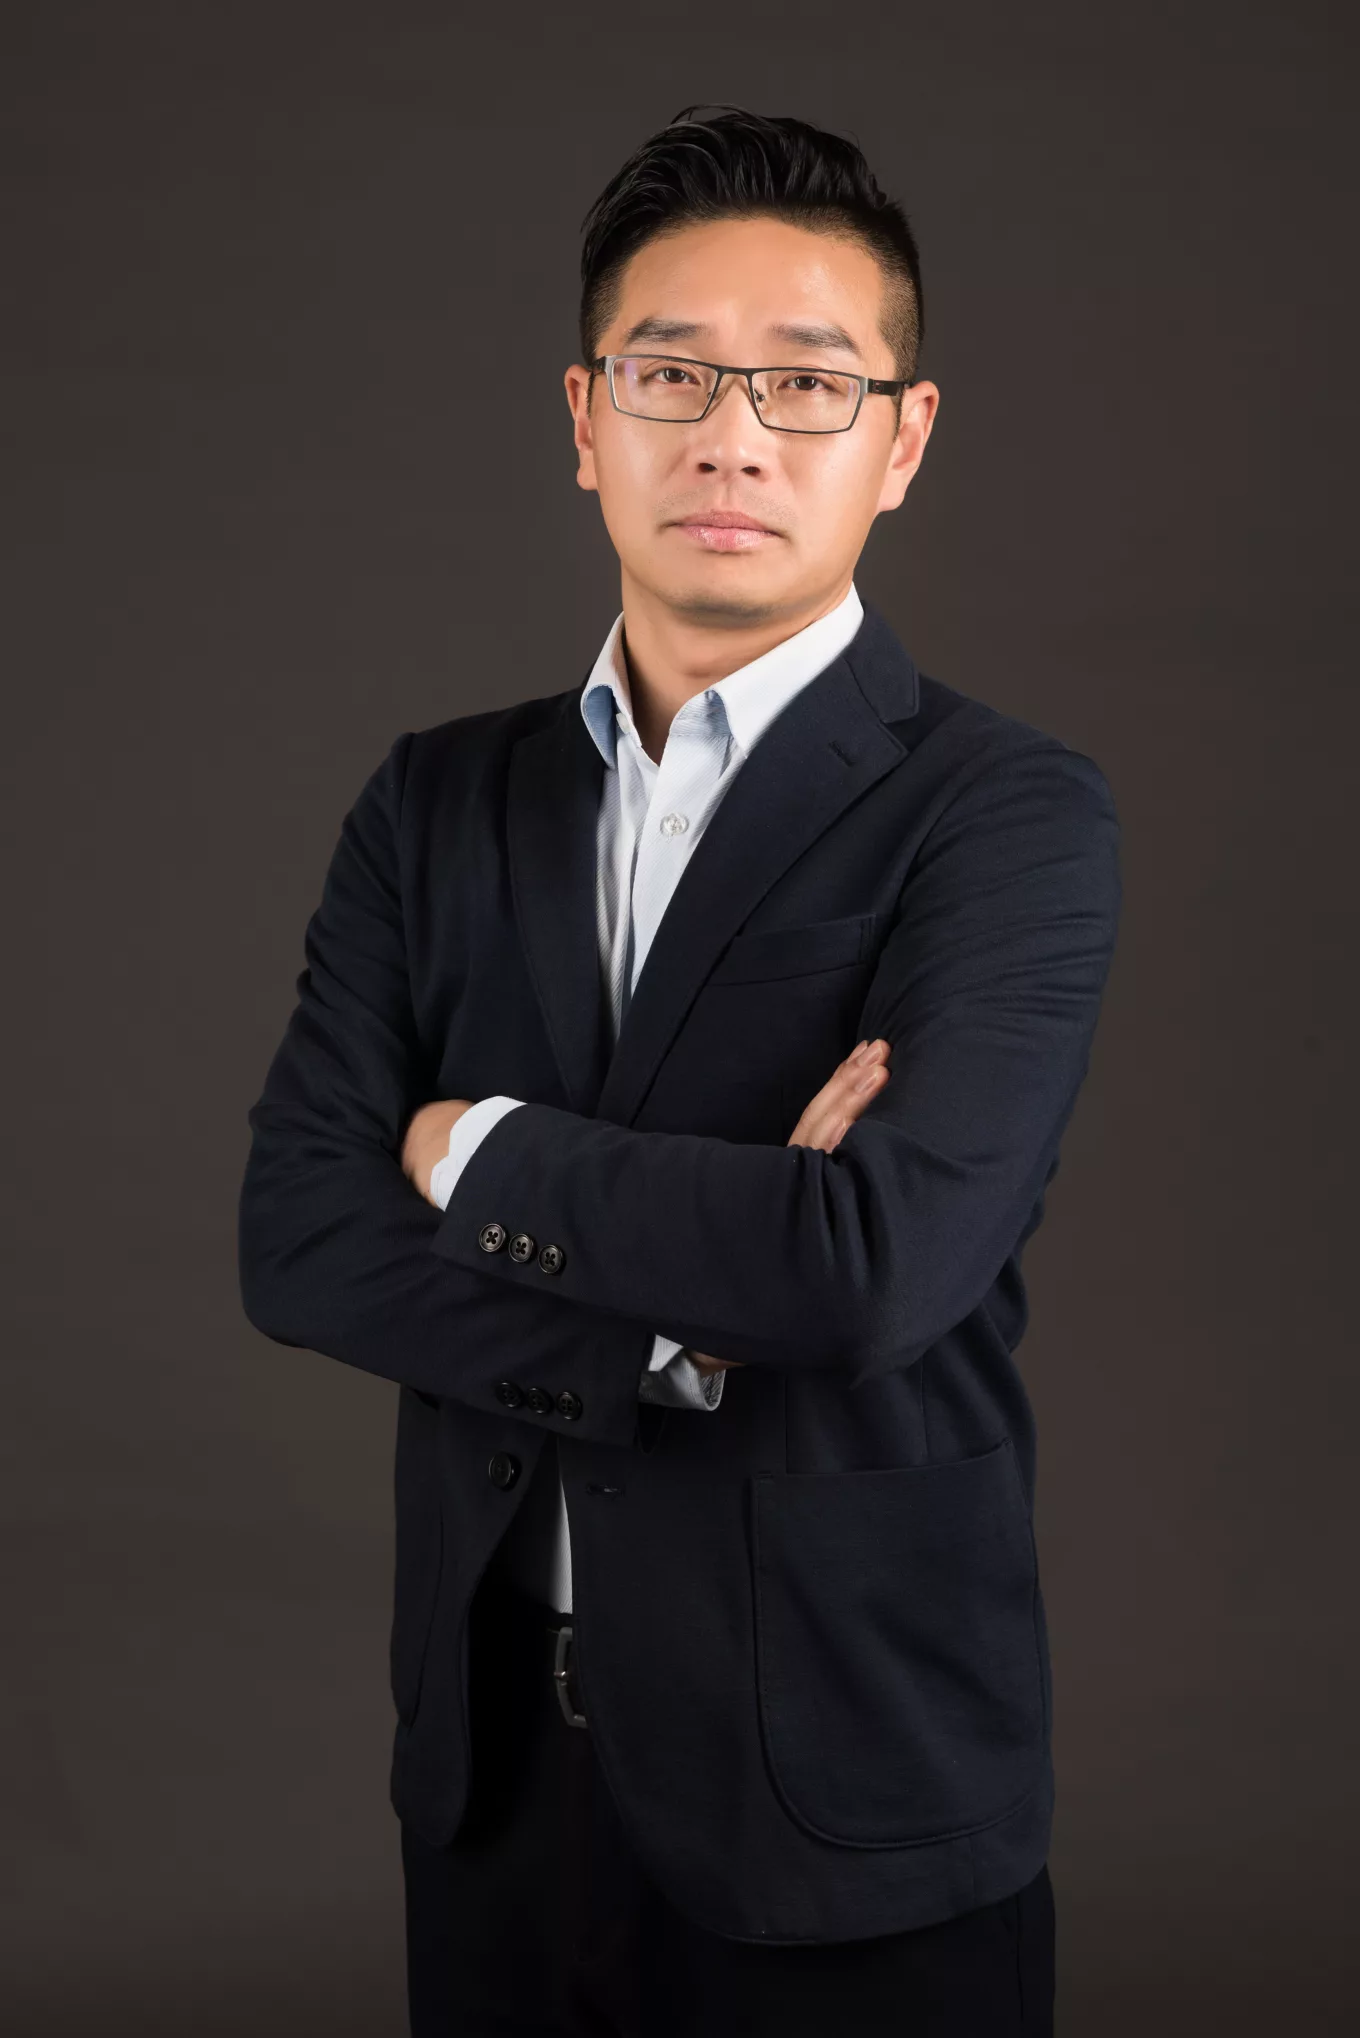 Mr Fei Yao | Press Service Center Great Wall Motors. Europe